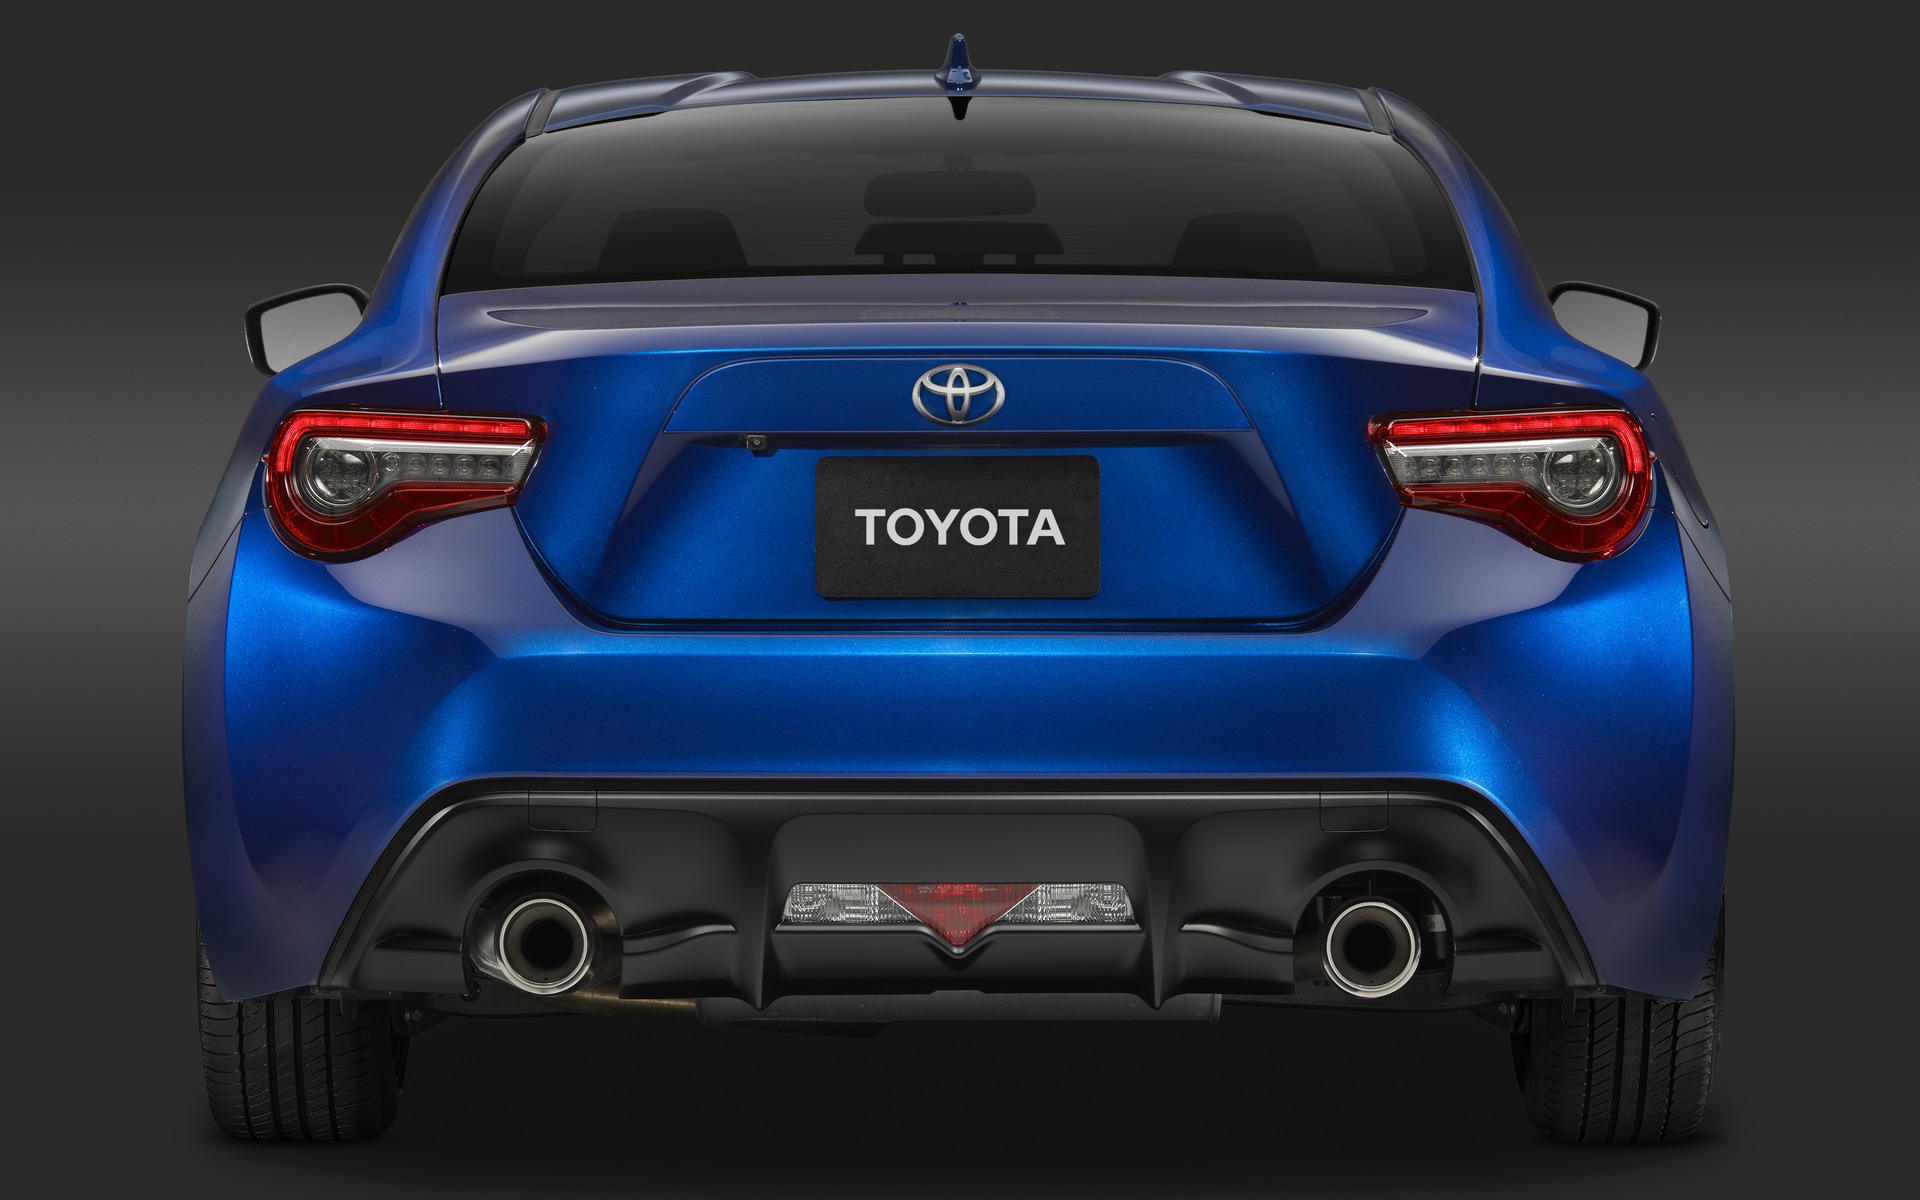 Toyota 86